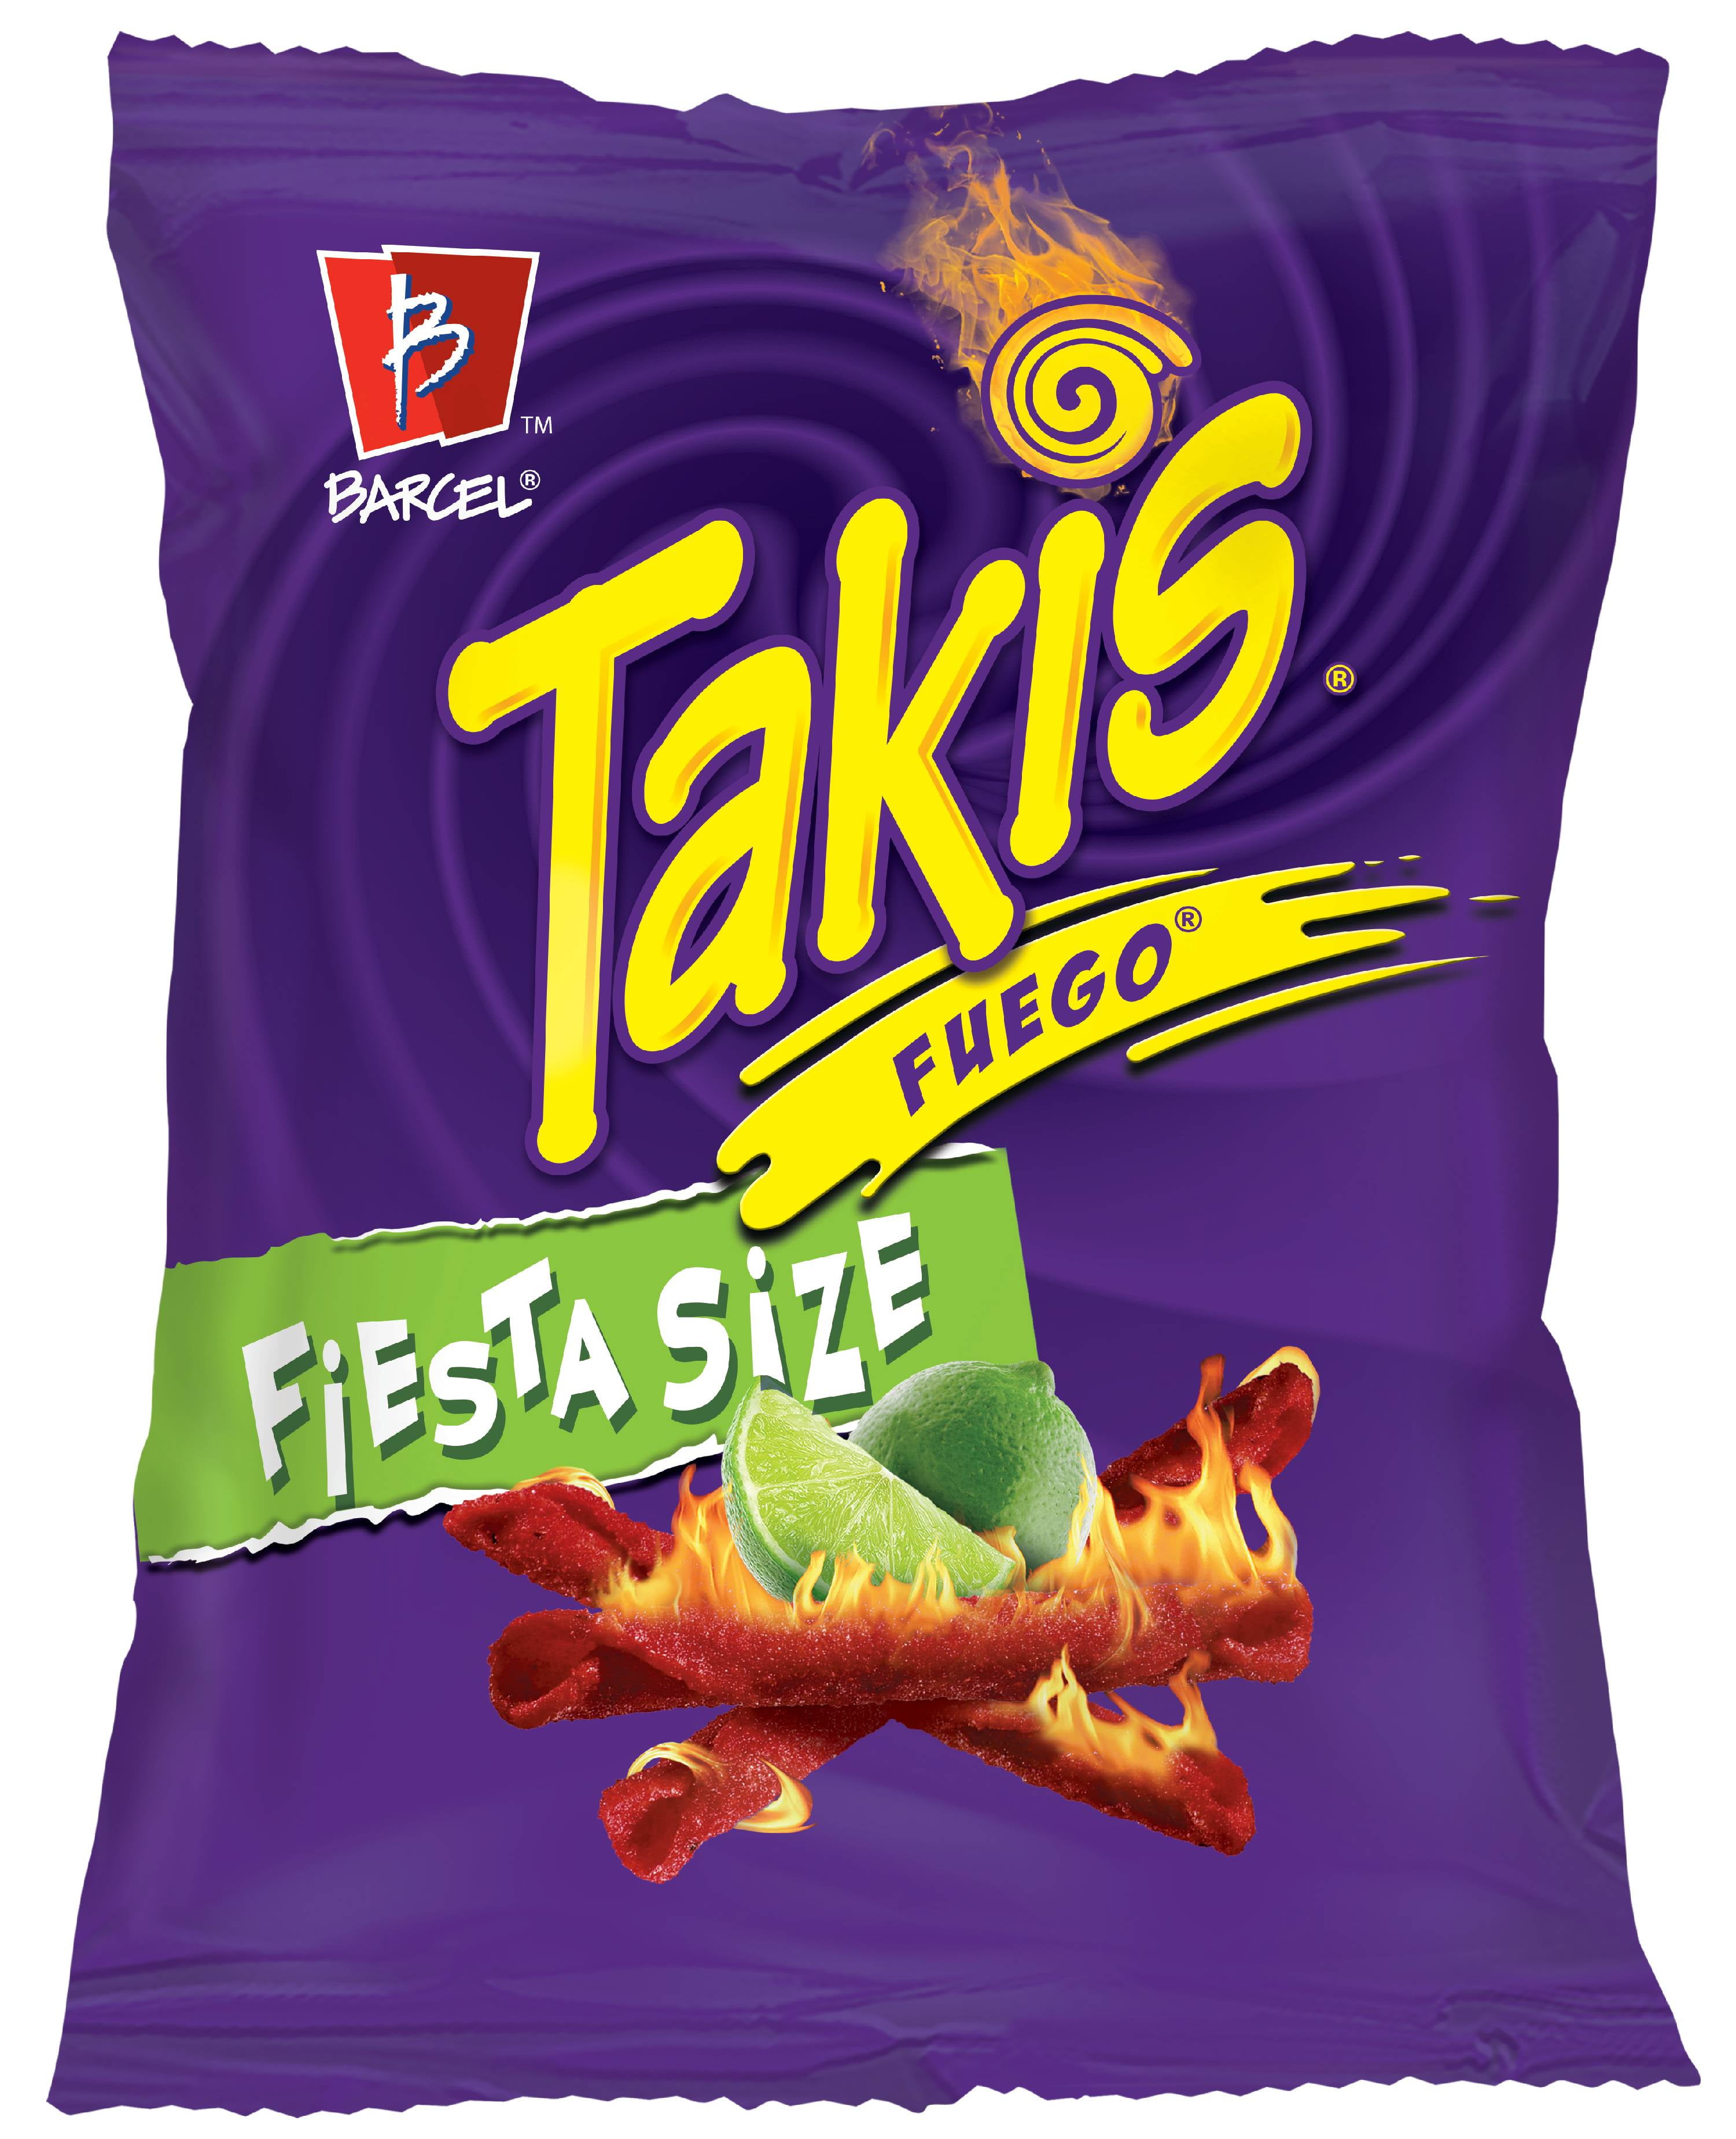 Takis Fuego Flavored Tortilla Chips Fiesta Size 20 Oz